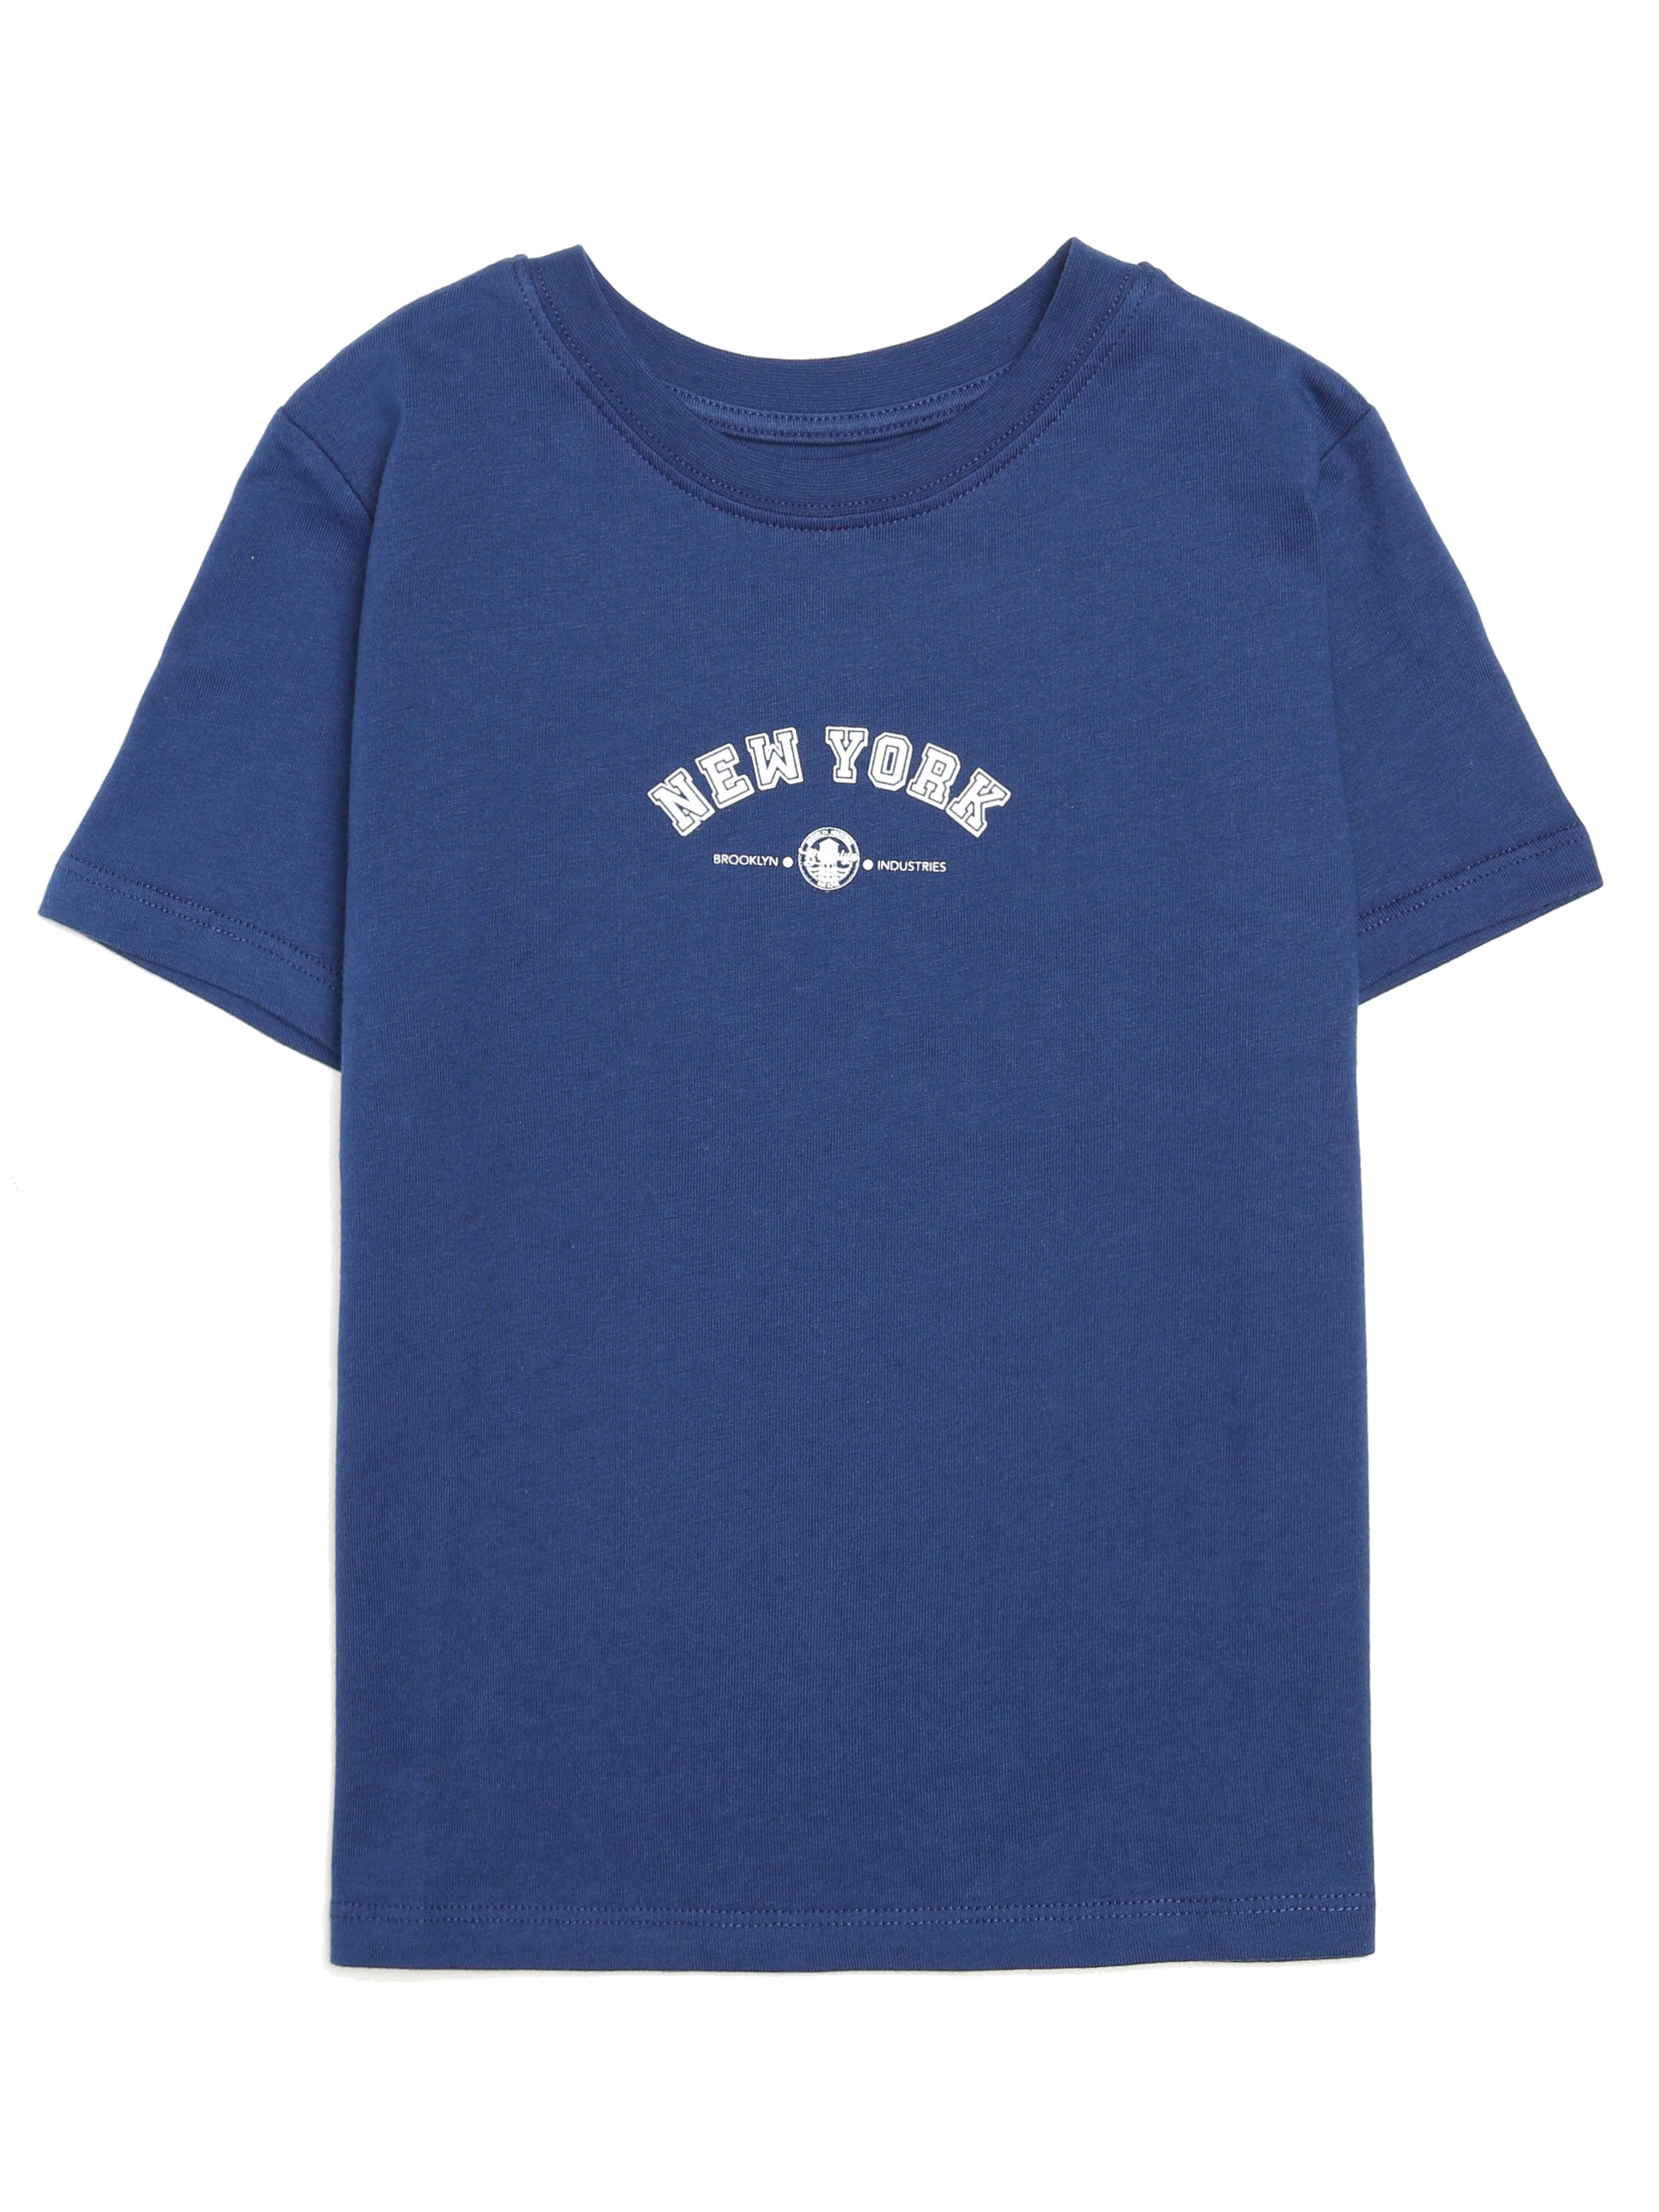 Toddlers Girls Brooklyn Script T-Shirt. — brooklynite designs.